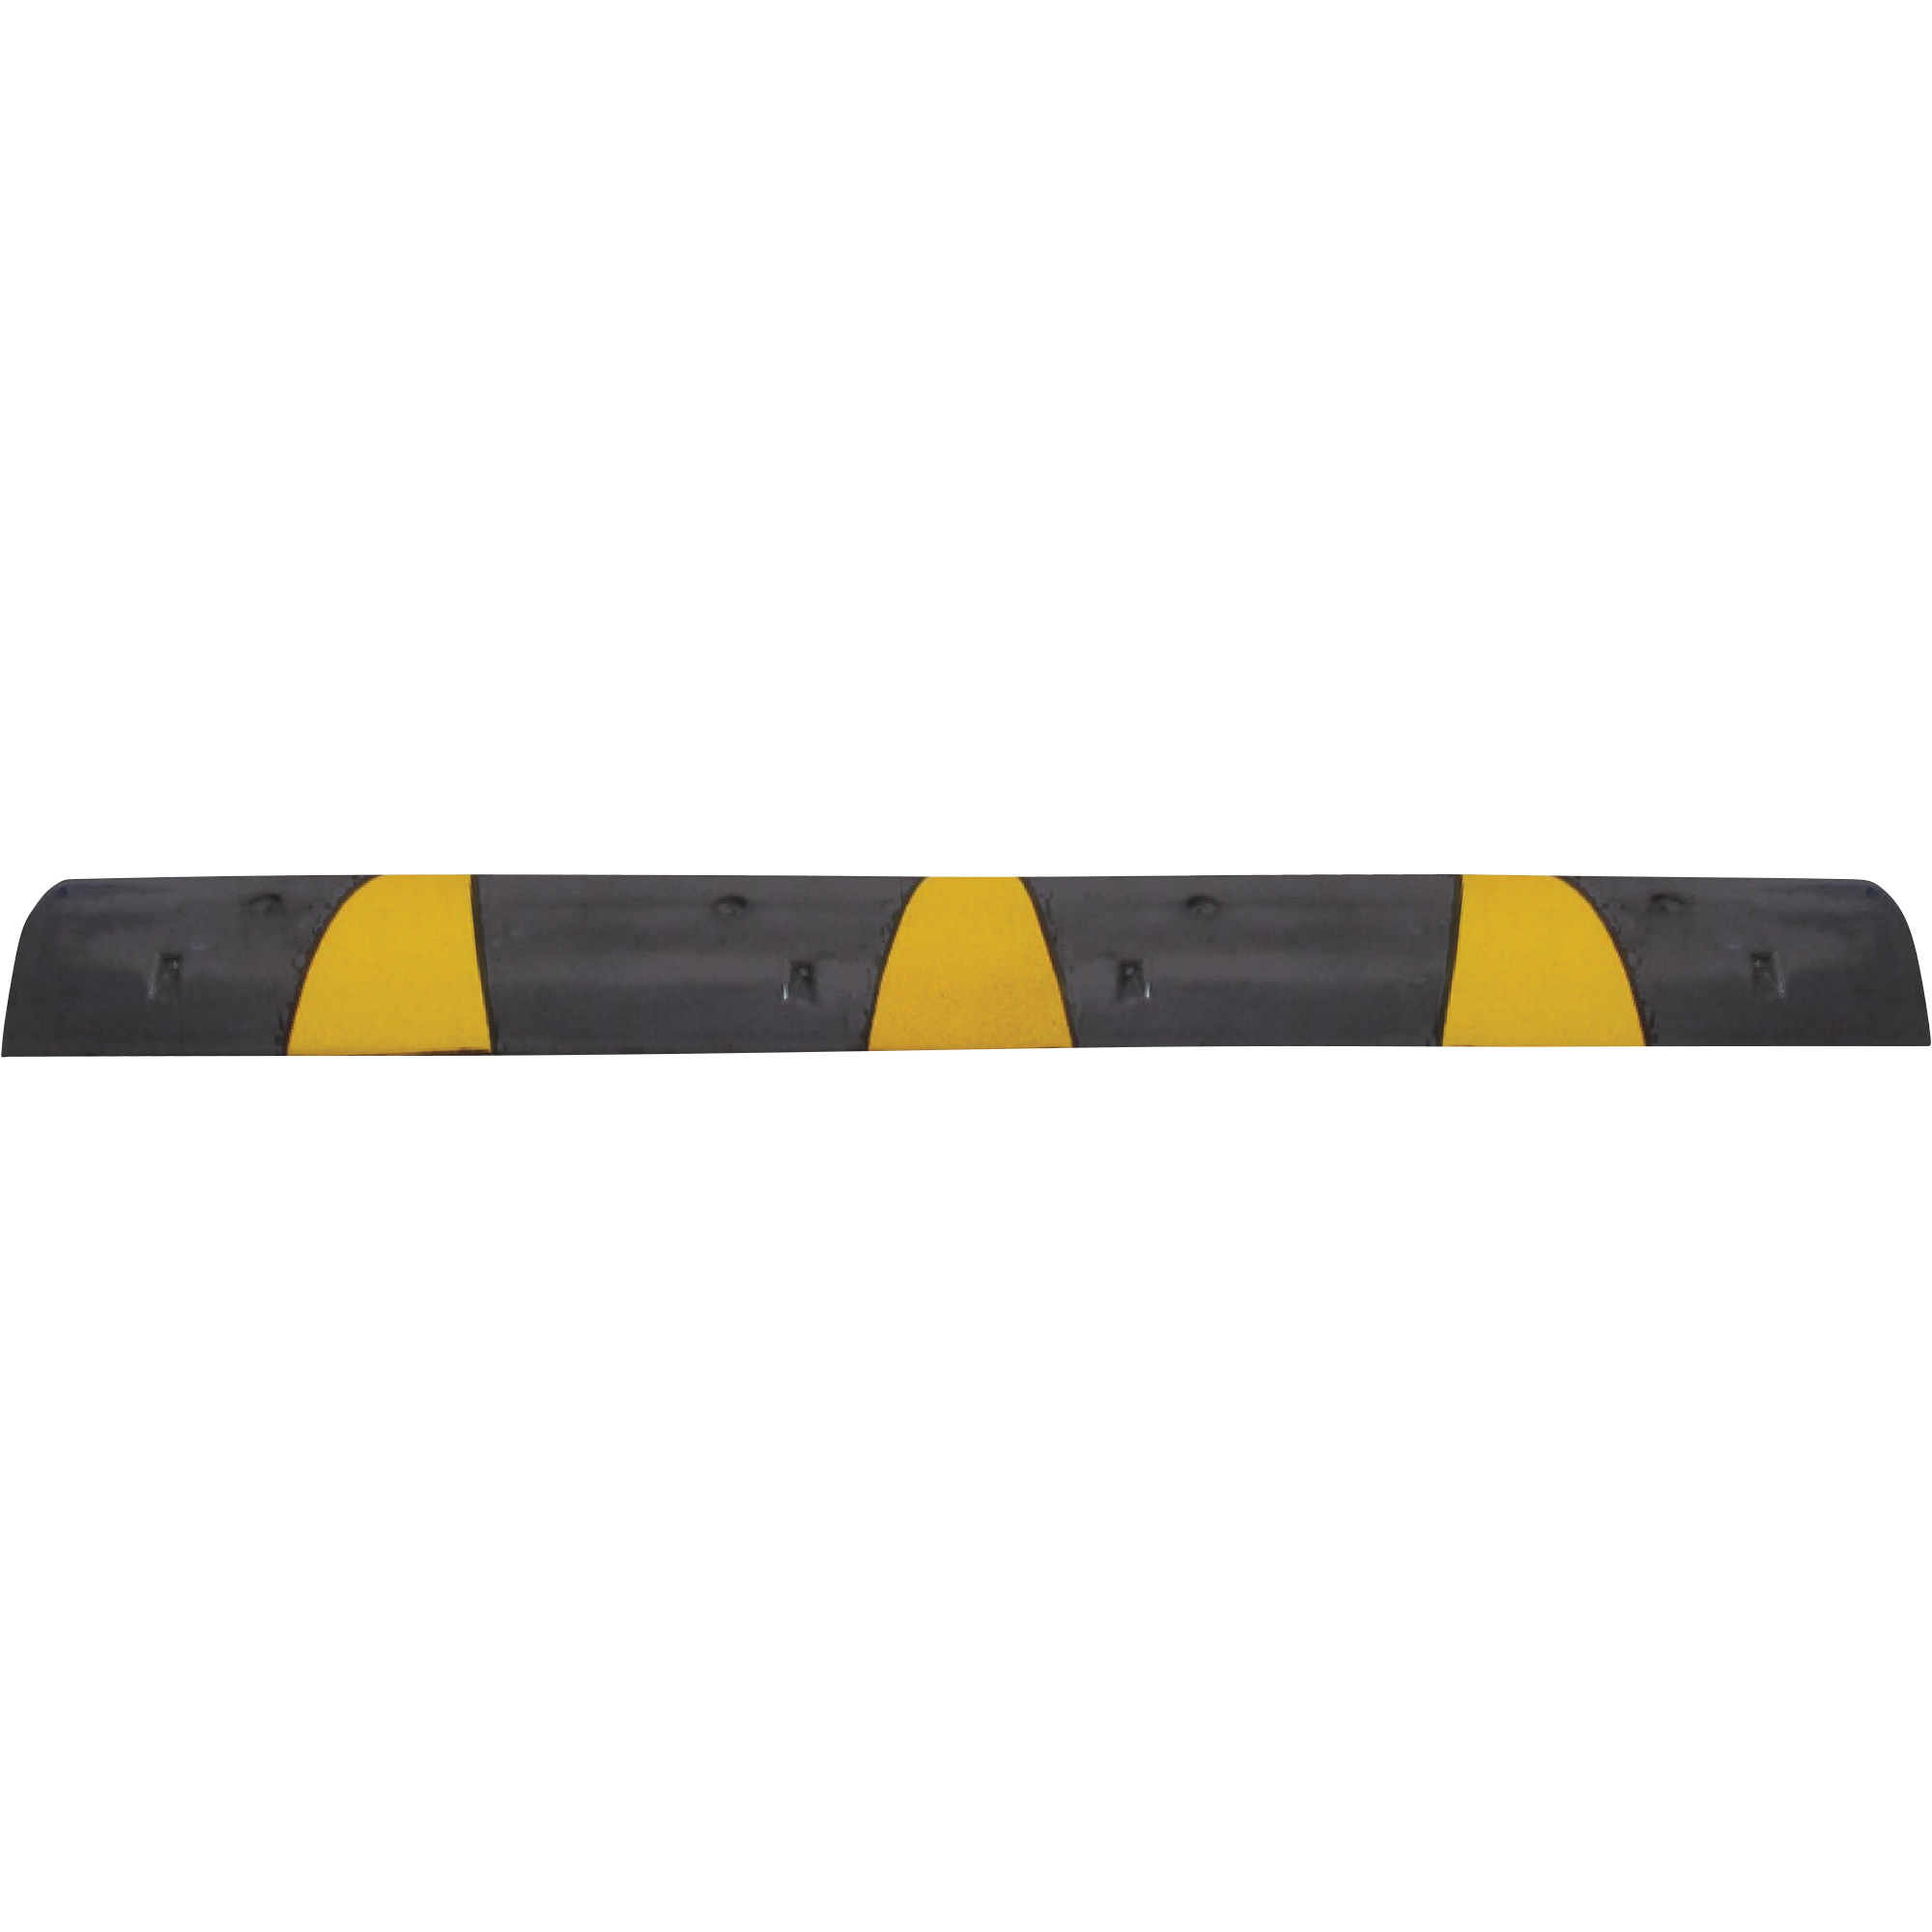 Plasticade 6ft. Speed Bump â Black with Yellow Stripes, 72Inch L x 12Inch W x 2 5/8Inch H, Model SB72N-S